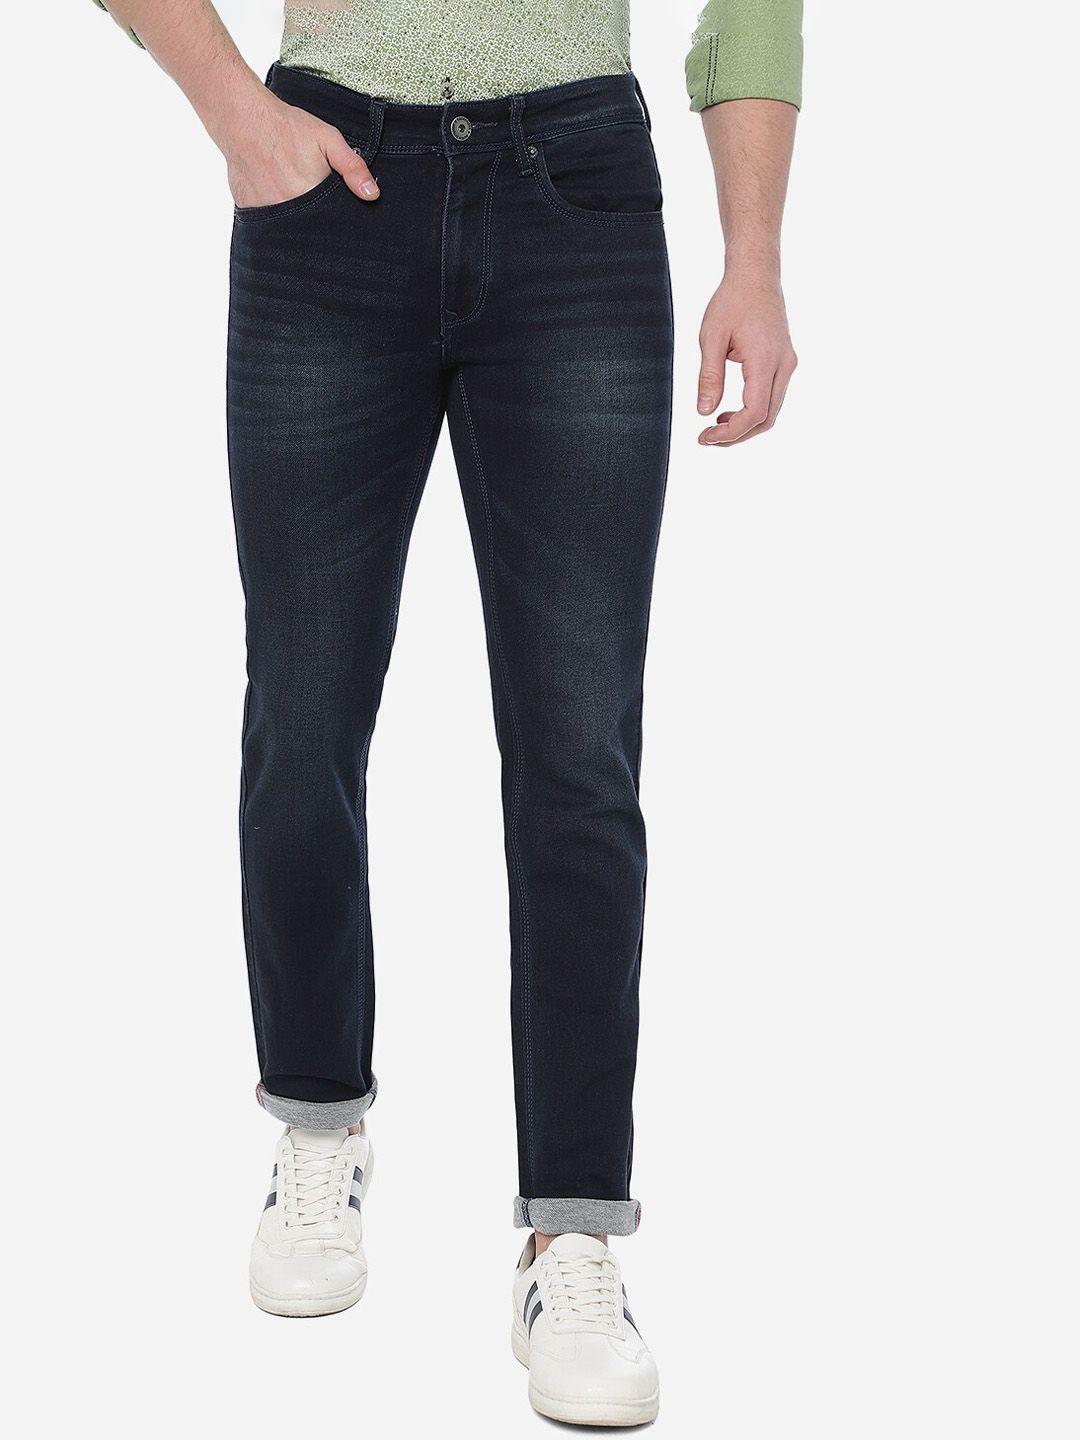 greenfibre men solid cotton slim fit light fade jeans